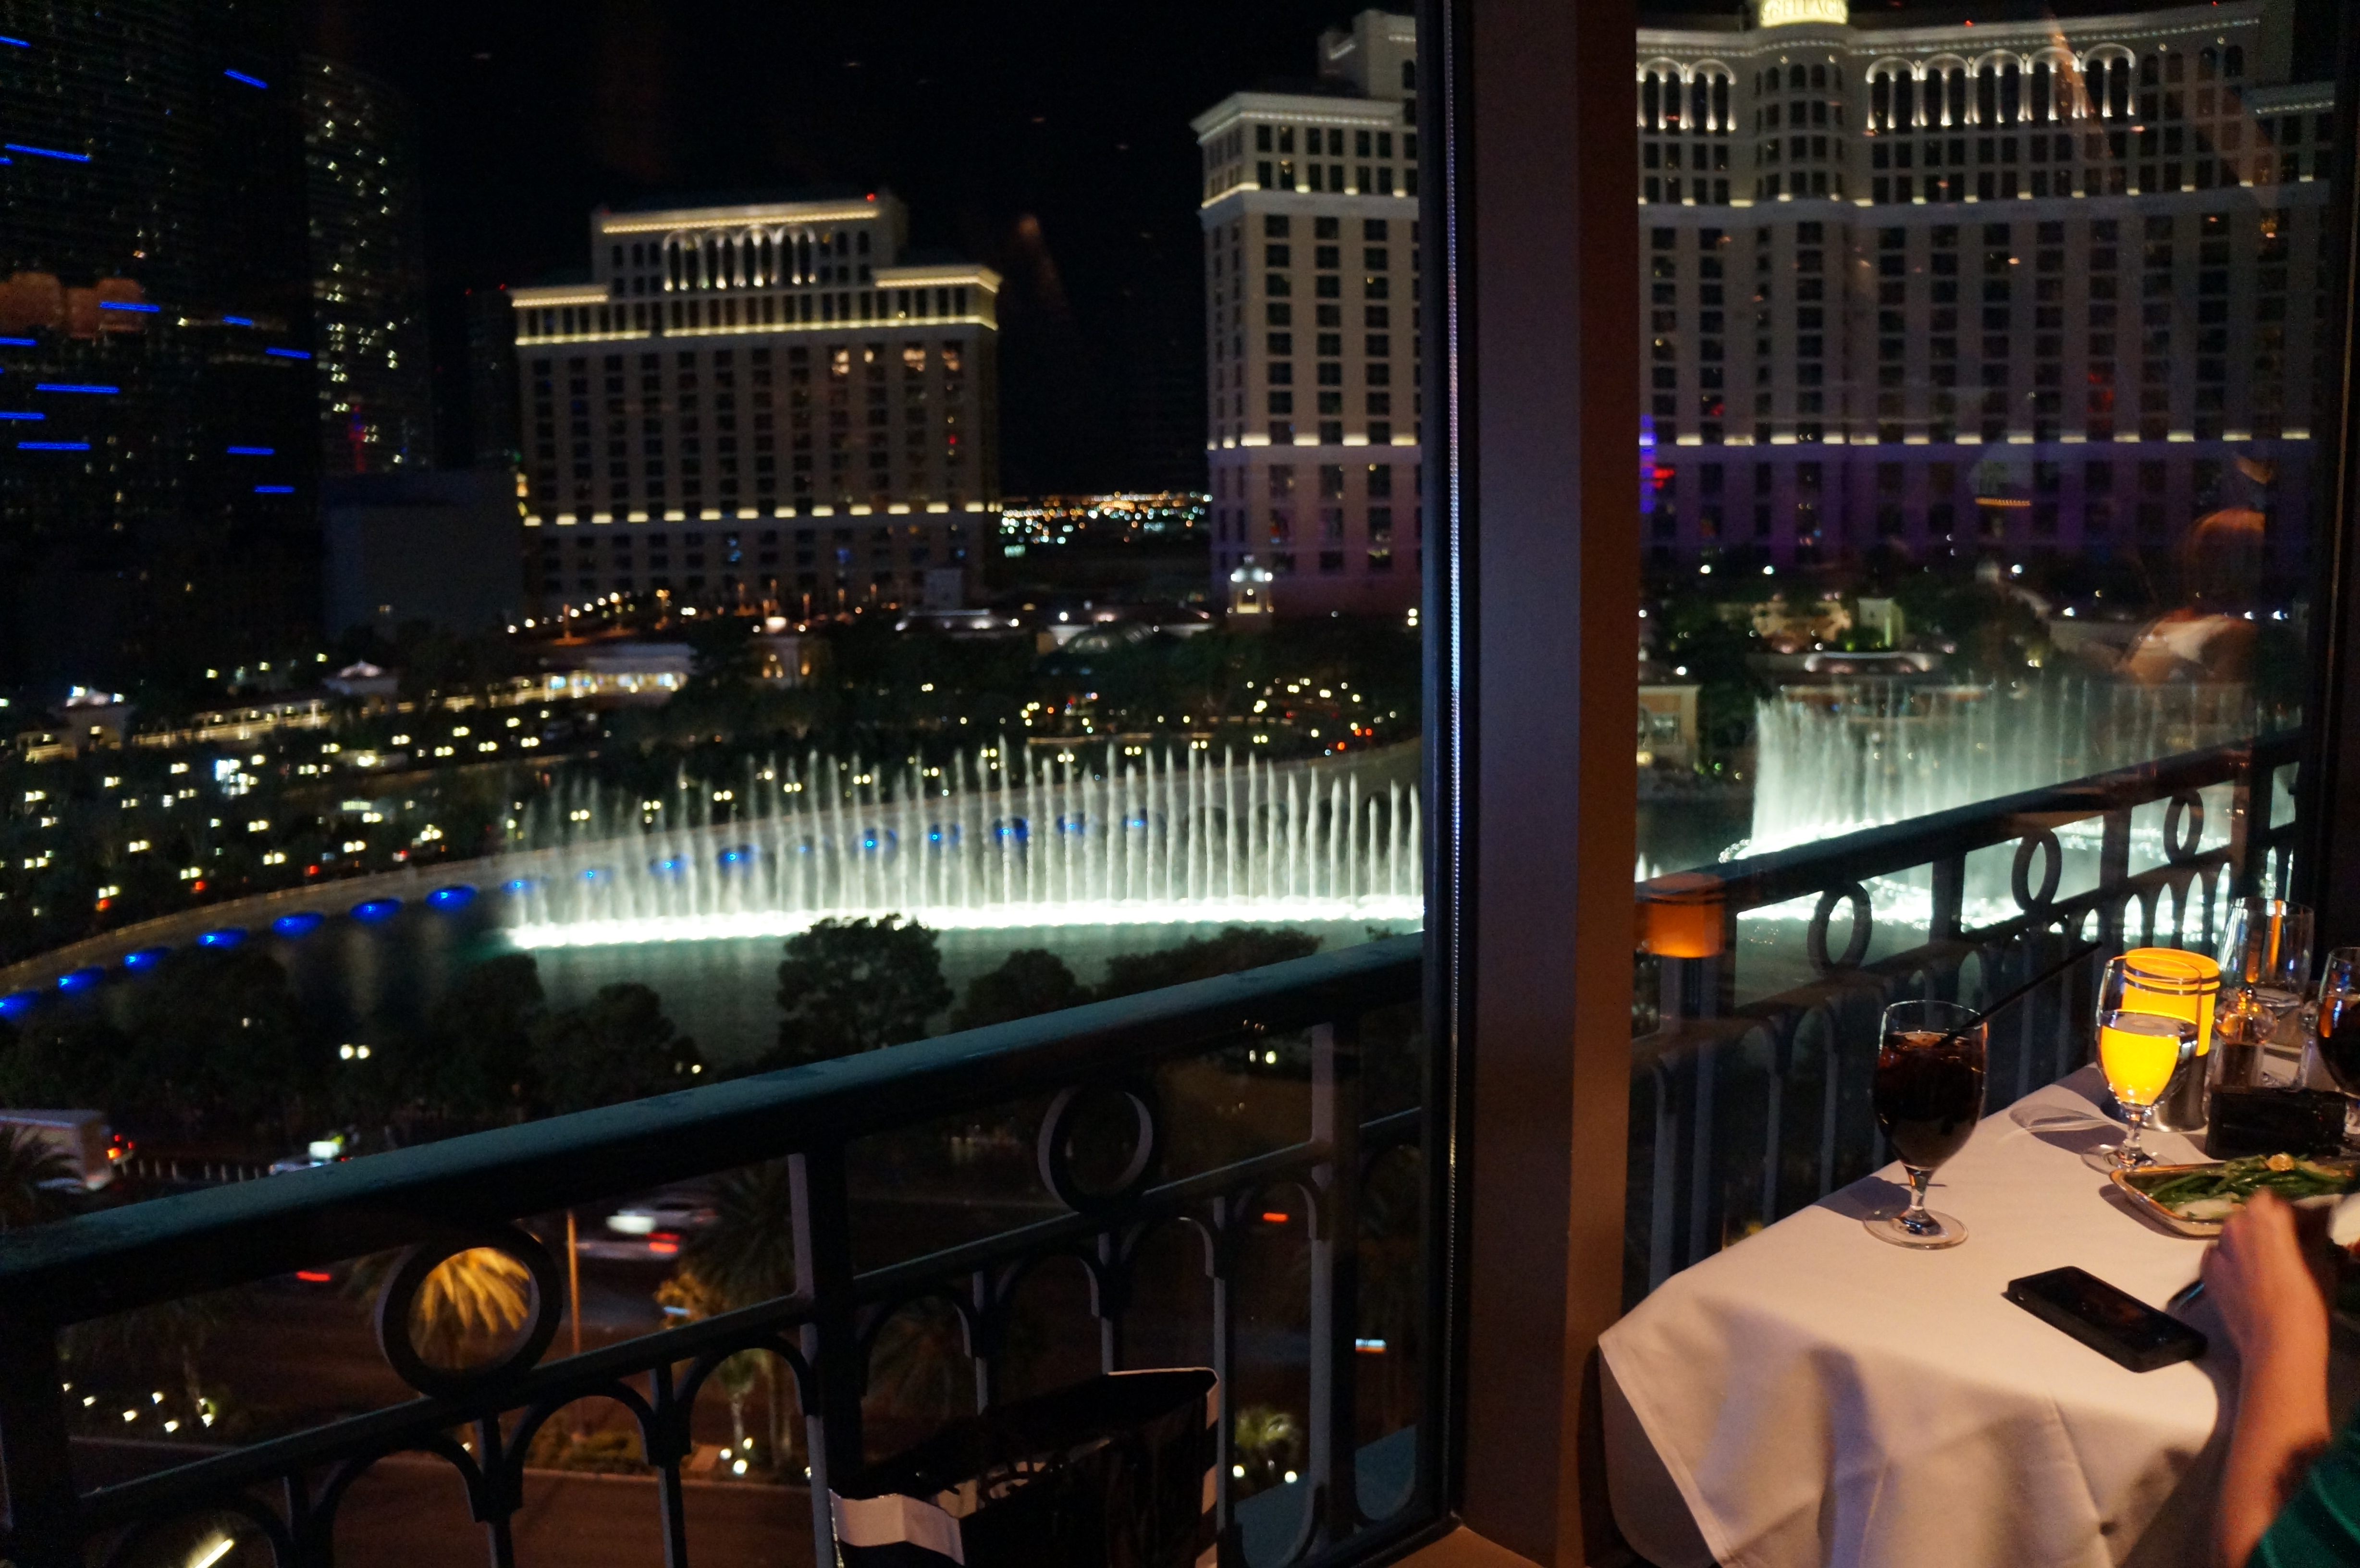 Eiffel Tower Restaurant is one of the best restaurants in Las Vegas